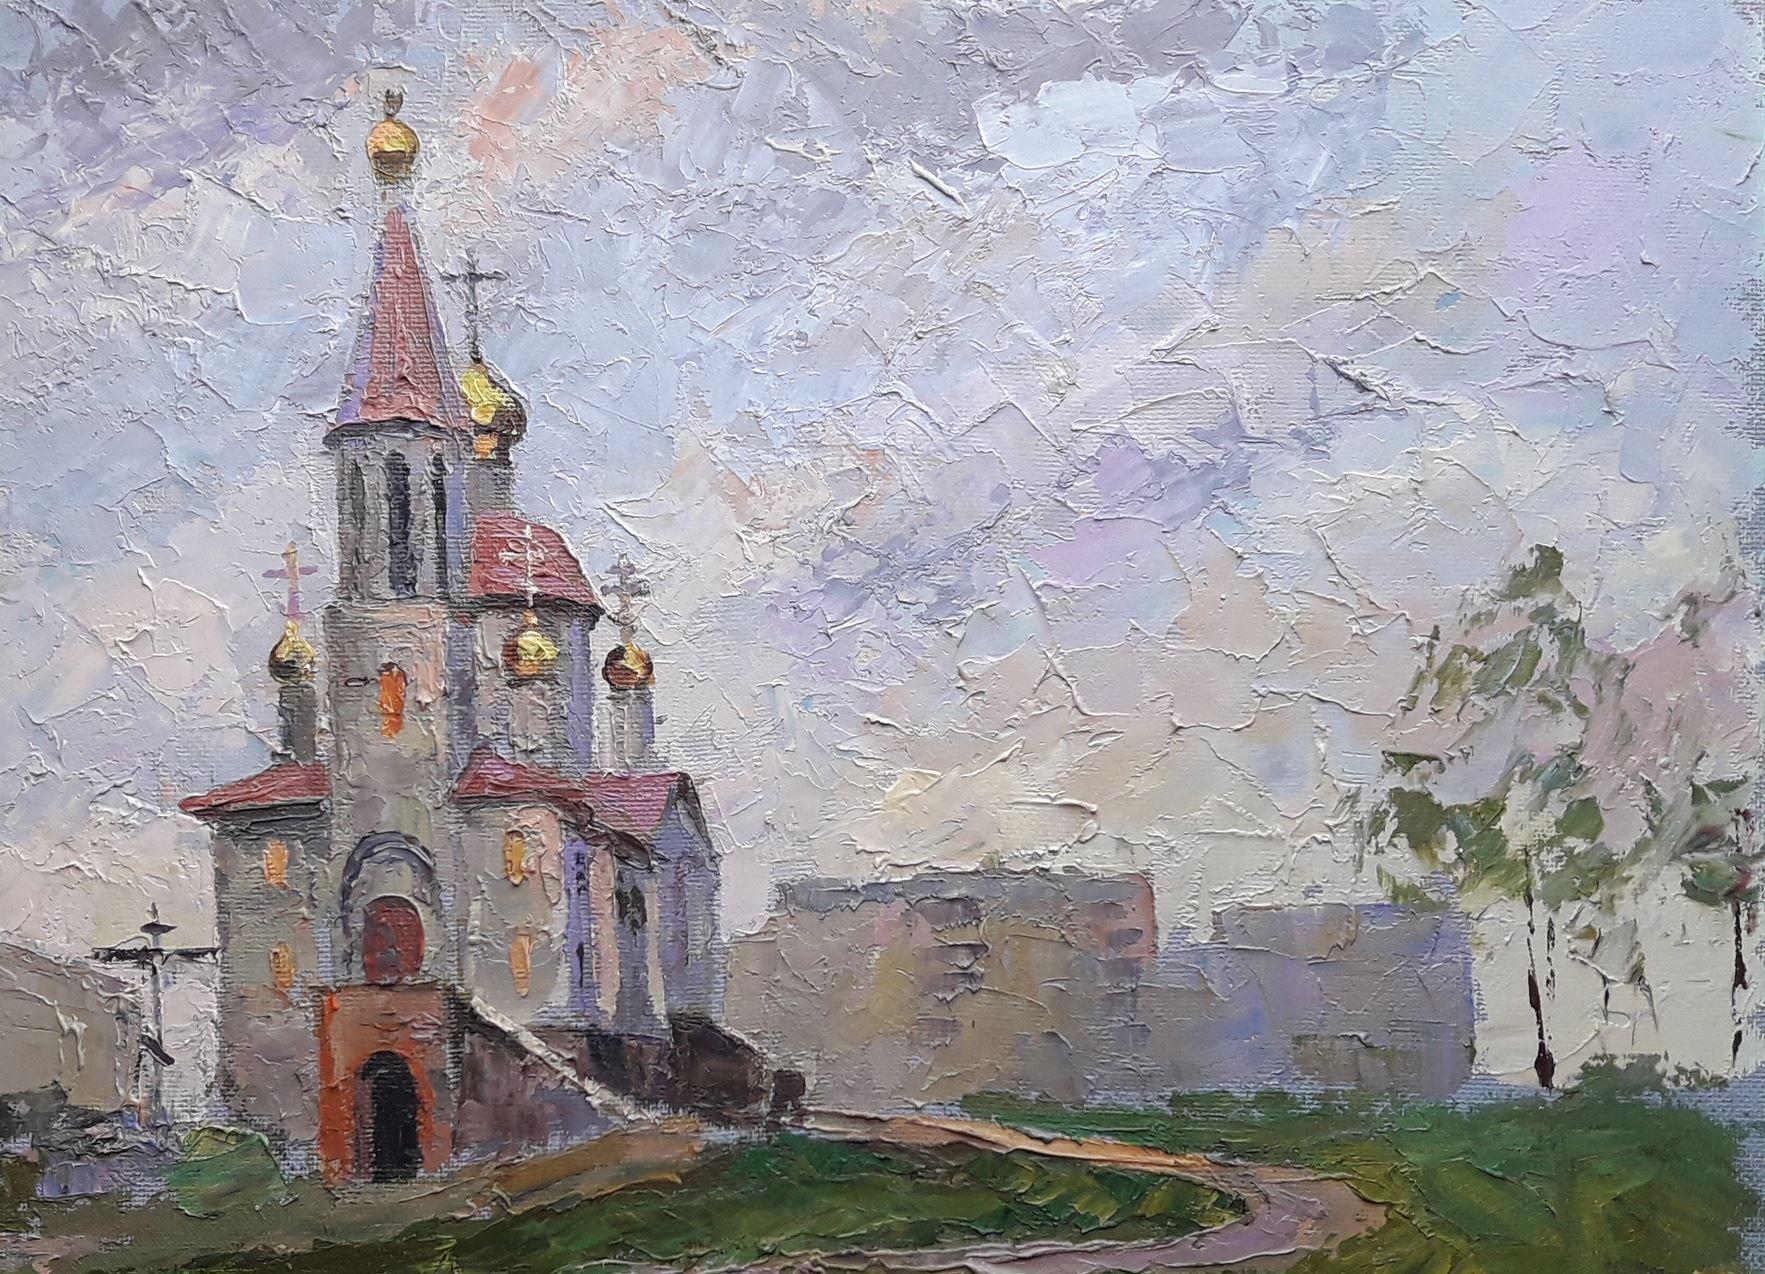 Artist: Boris Serdyuk 
Work: Original oil painting, handmade artwork, one of a kind 
Medium: Oil on Canvas
Style: Impressionism
Year: 2020
Title: Temple near the river
Size: 20